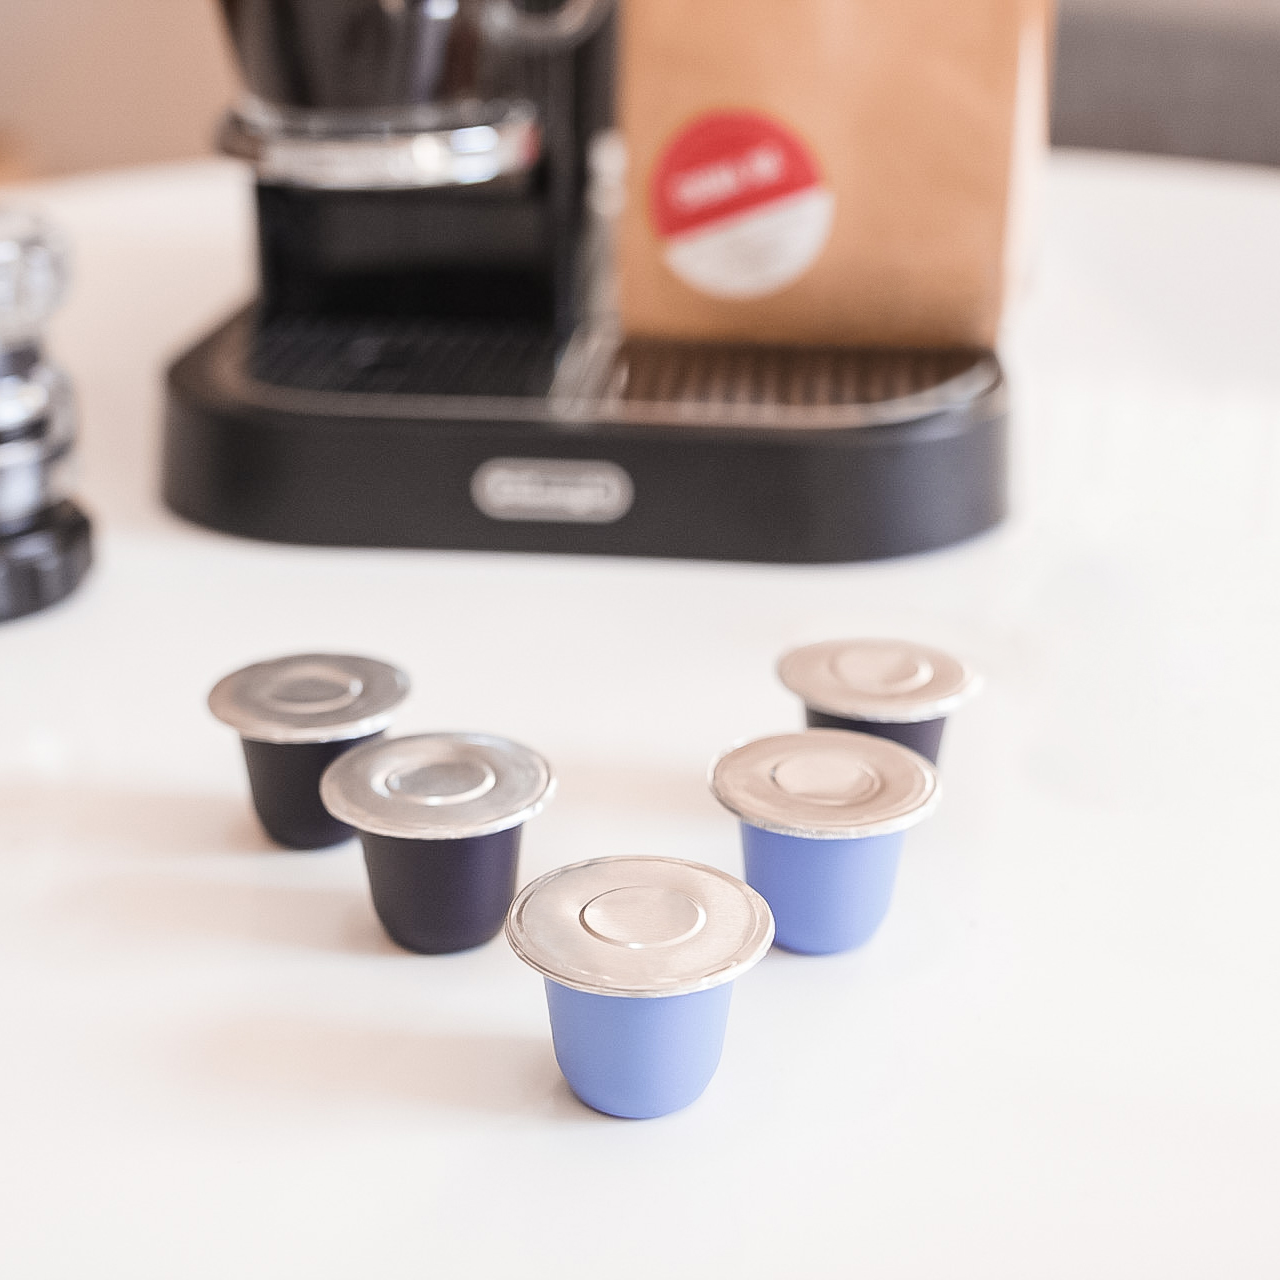 A cheap alternative to Nespresso pods - fill & refill Bluecup capsules